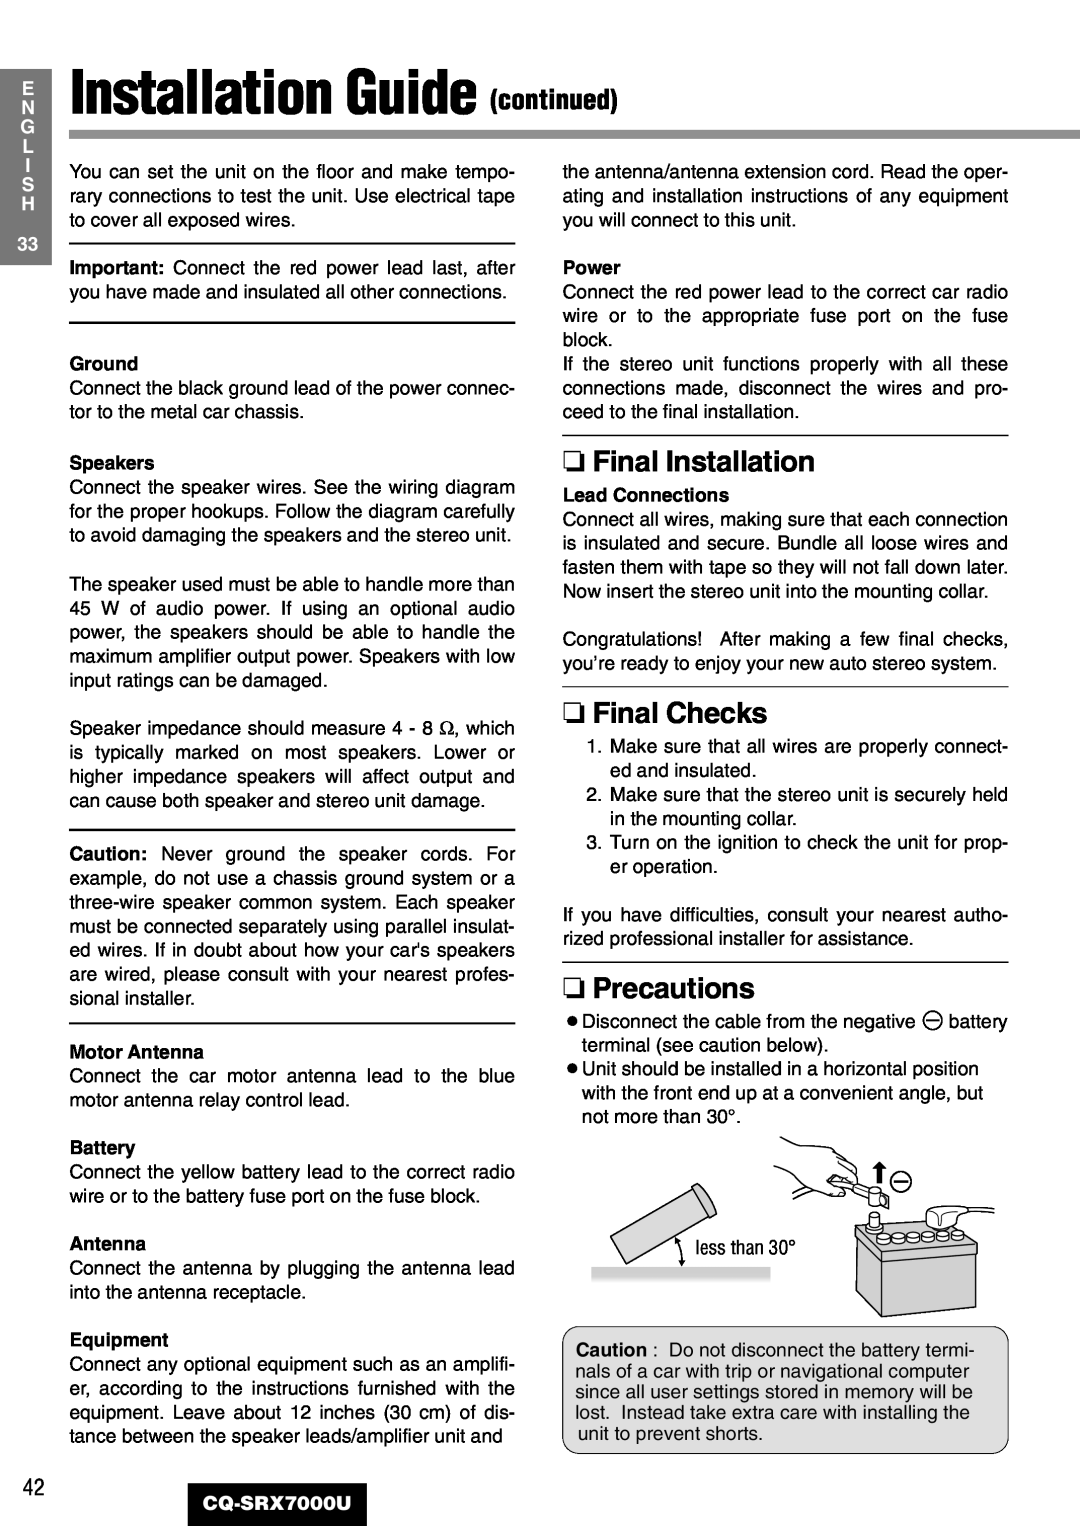 Panasonic CQ-SRX7000U manual Installation Guide continued, Final Installation, Final Checks, Precautions 